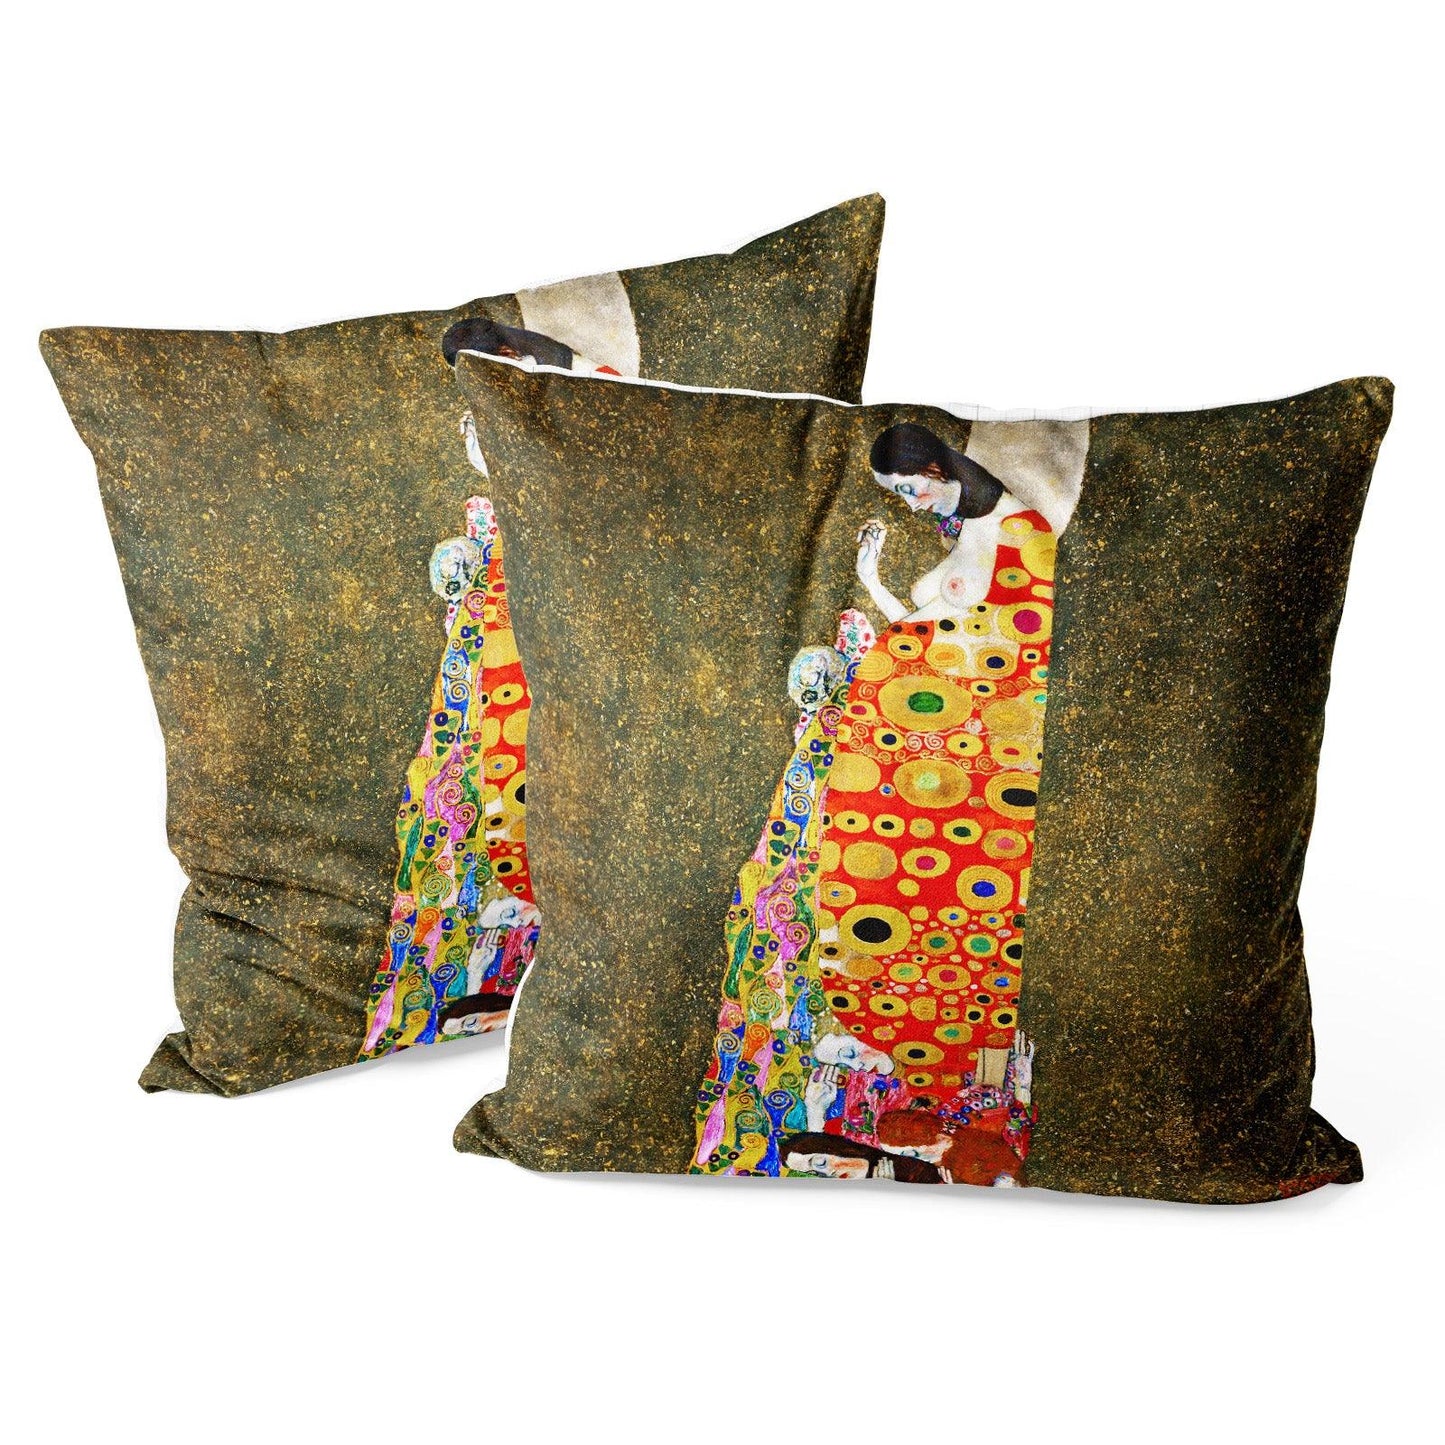 Art Decor Throw Pillow Covers Pack of 2 18x18 Inch (Hope by Gustav Klimt) - Berkin Arts